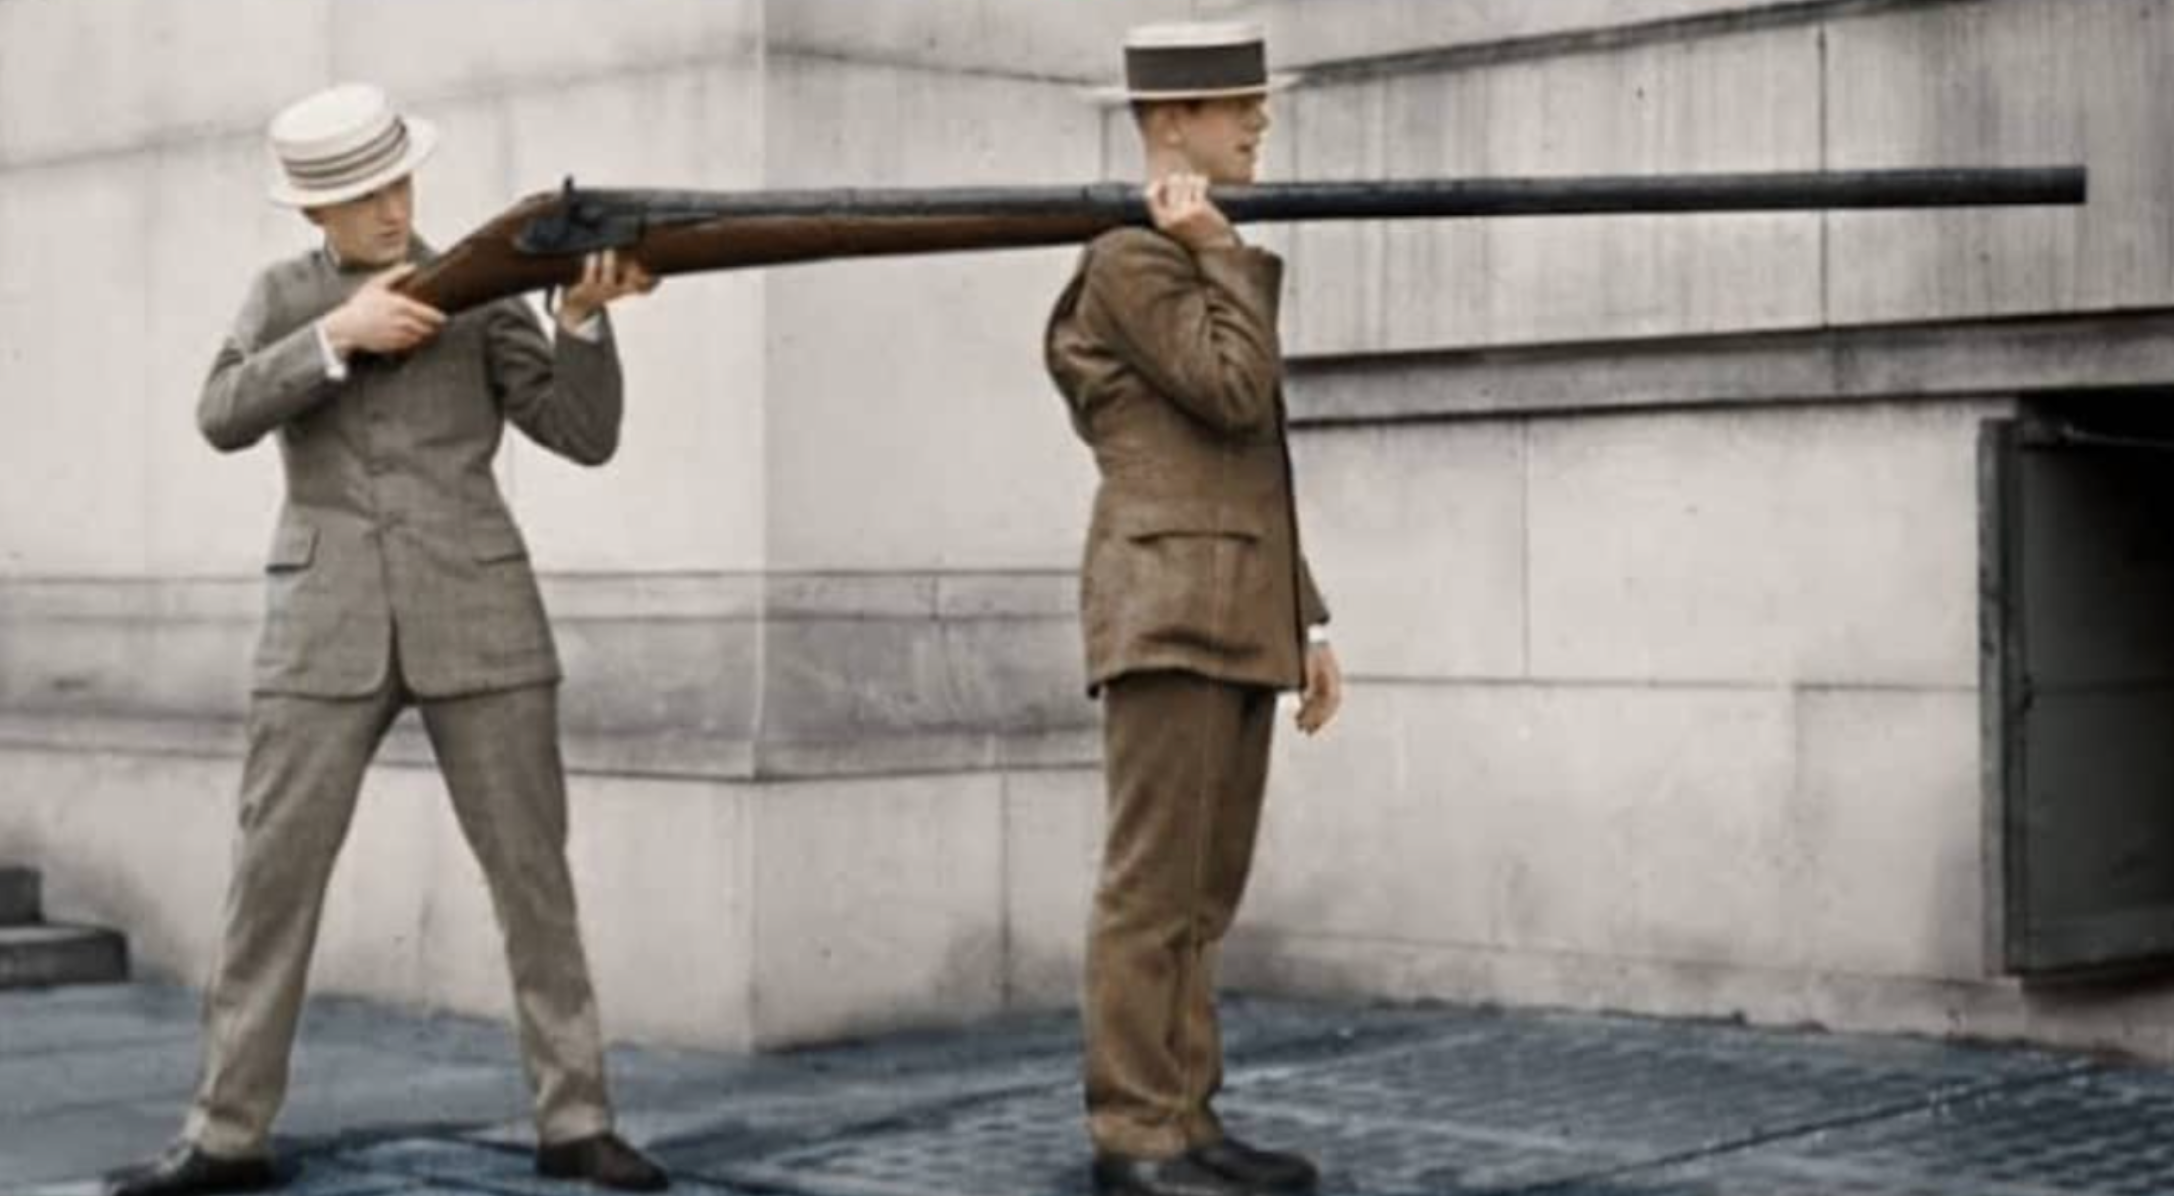 Incredibly interesting guns - Punt gun being held by two men